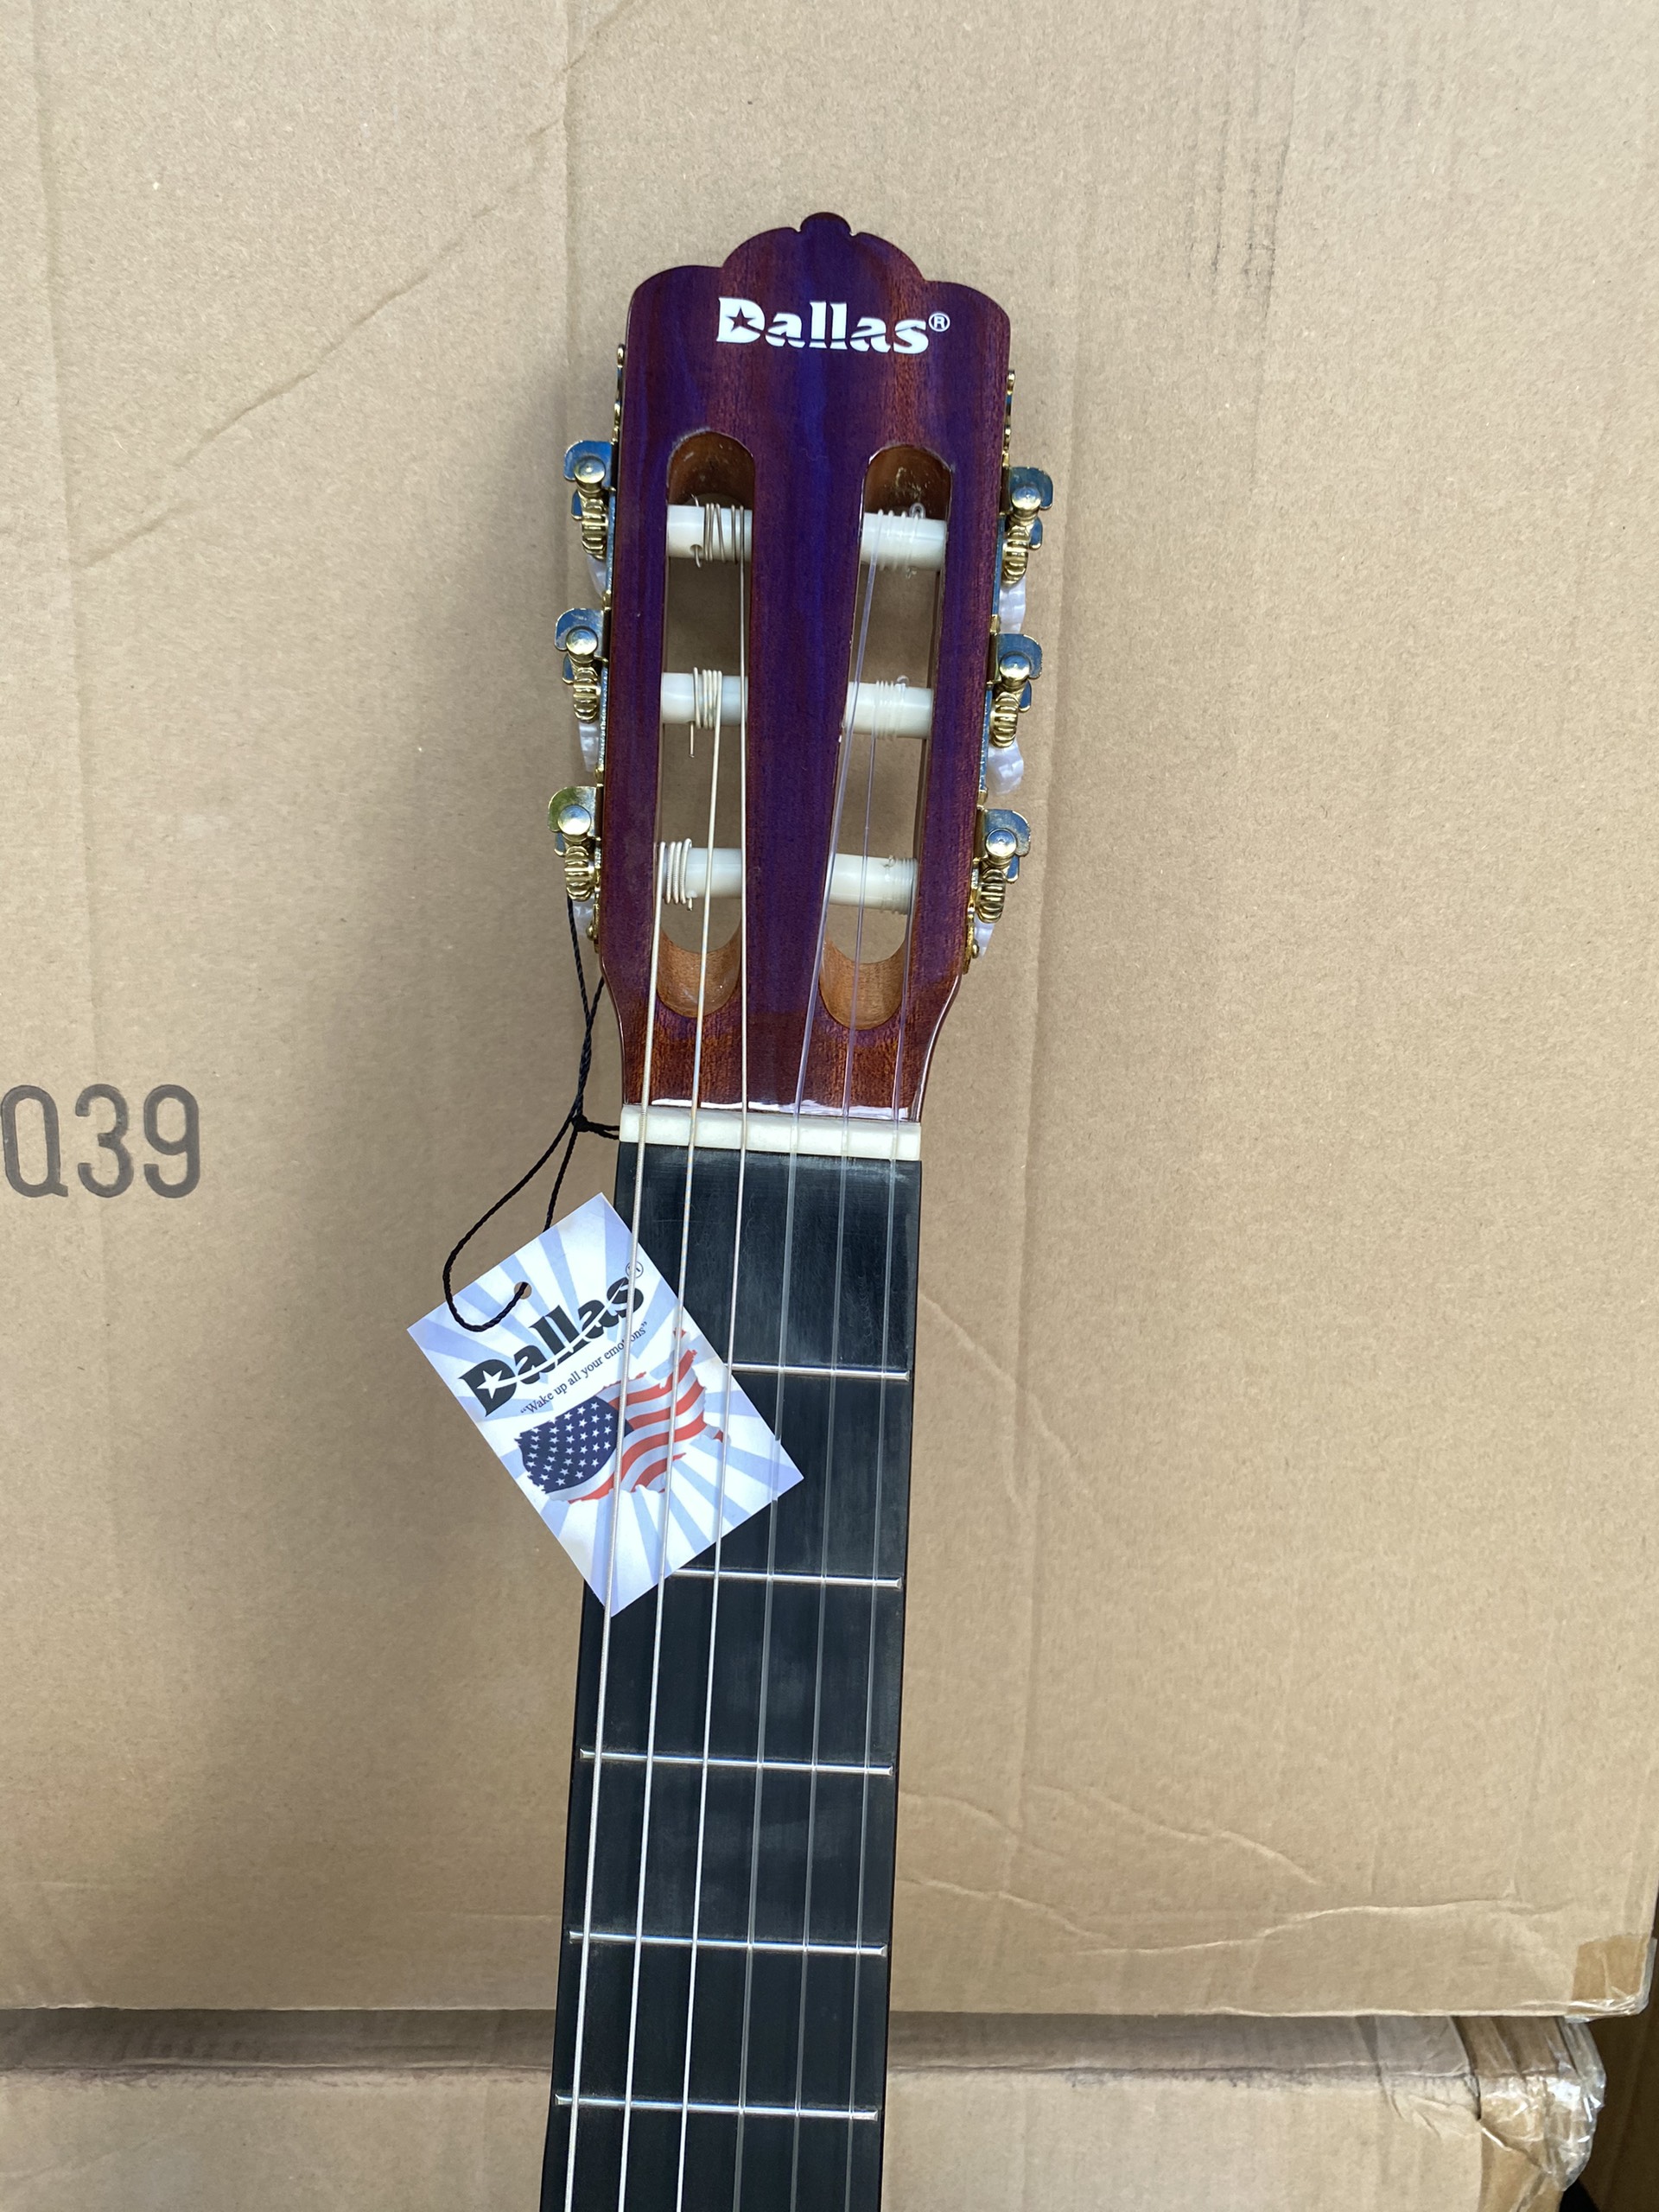 Bán sỉ đàn guitar classic Dallas DL-Q39